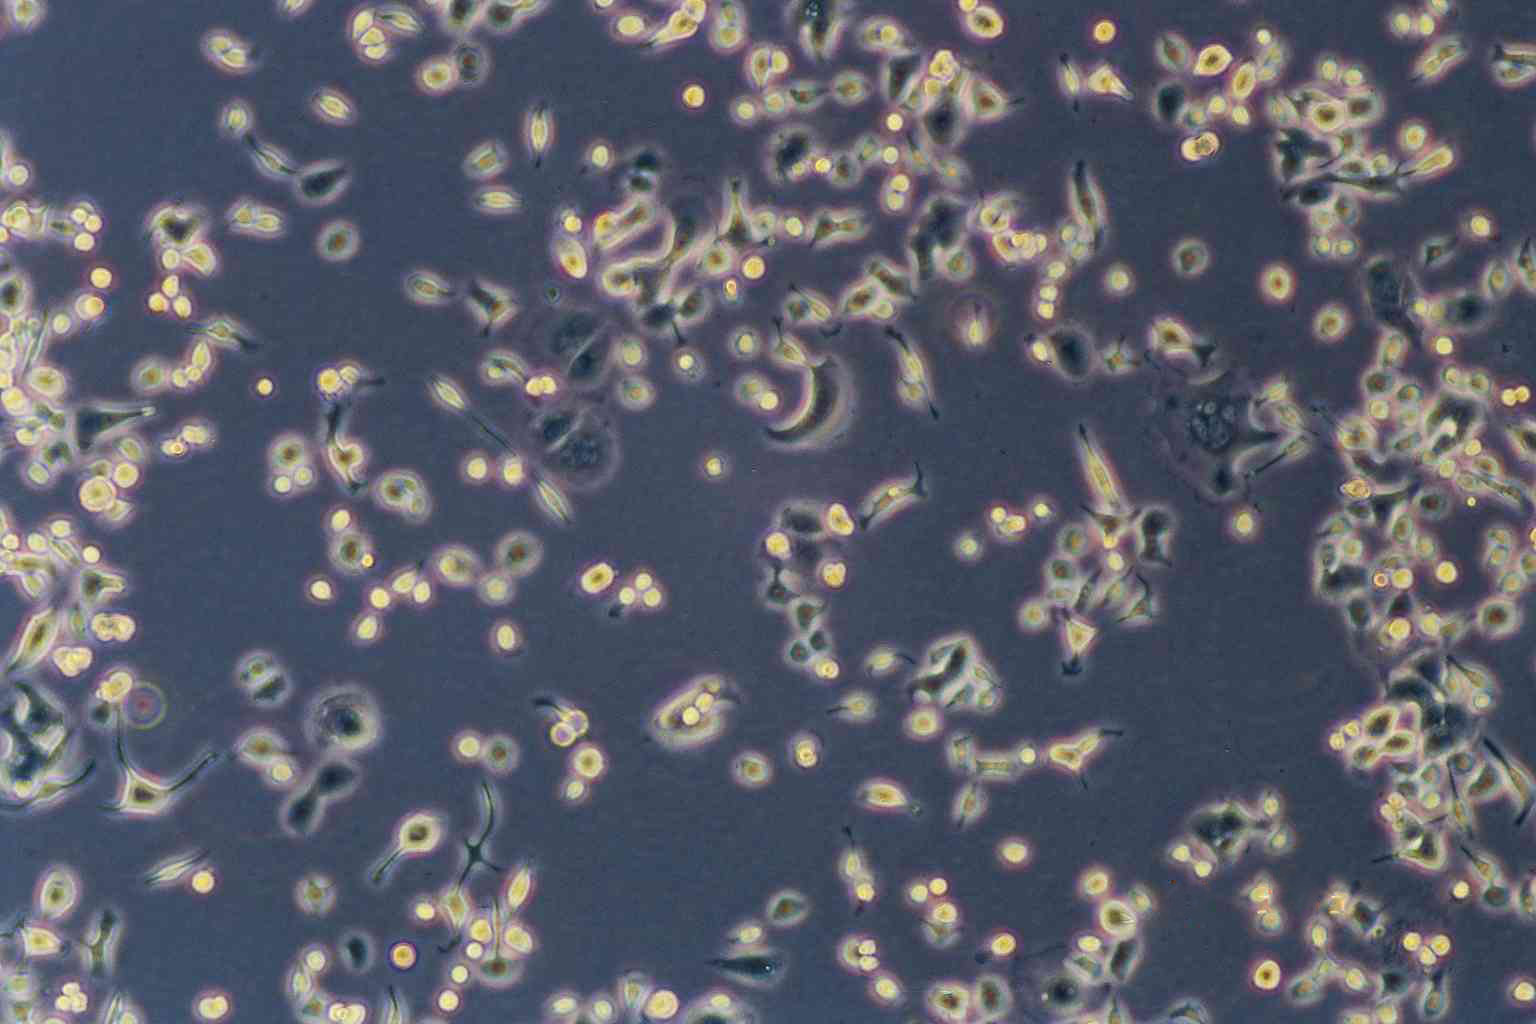 UM-UC-1 Cell|人膀胱移行癌细胞